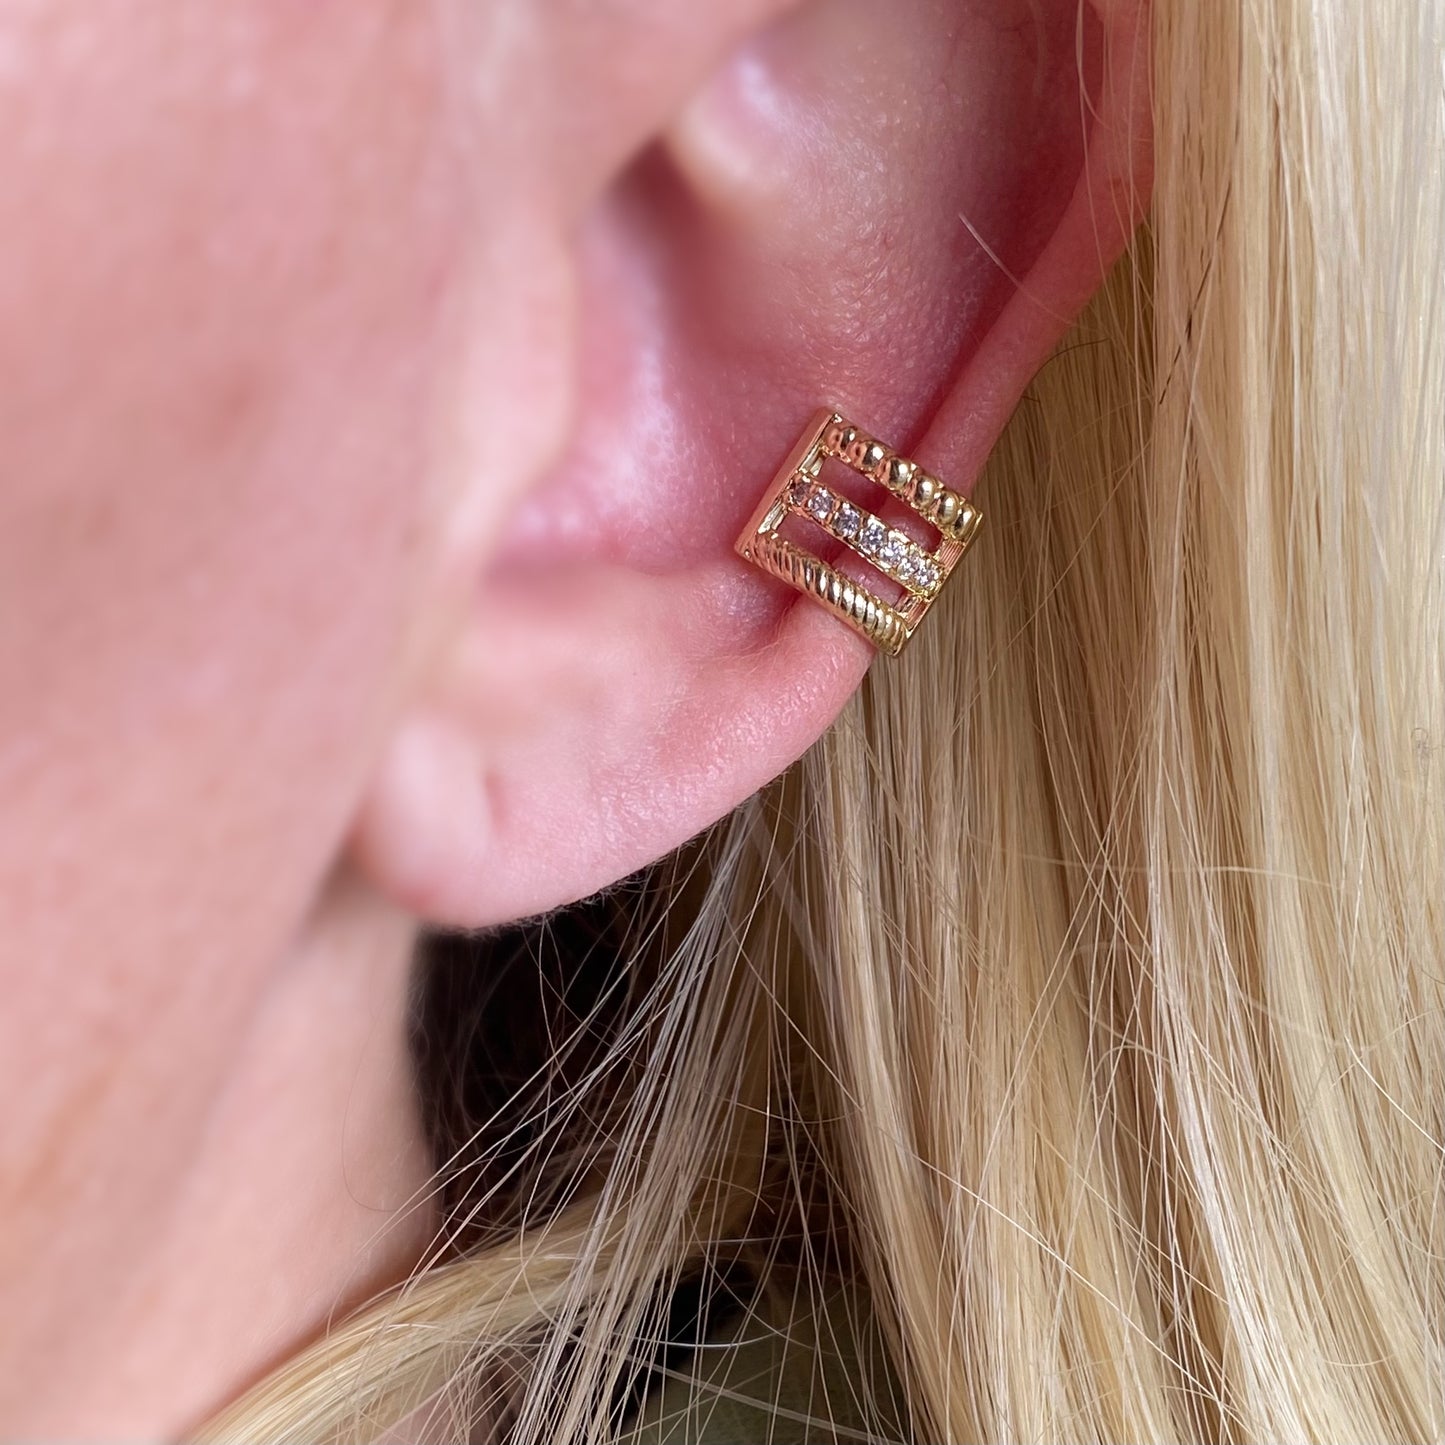 18k Gold Filled 3 in 1 Ear Cuff Earrings With Cubic Zirconia Detail